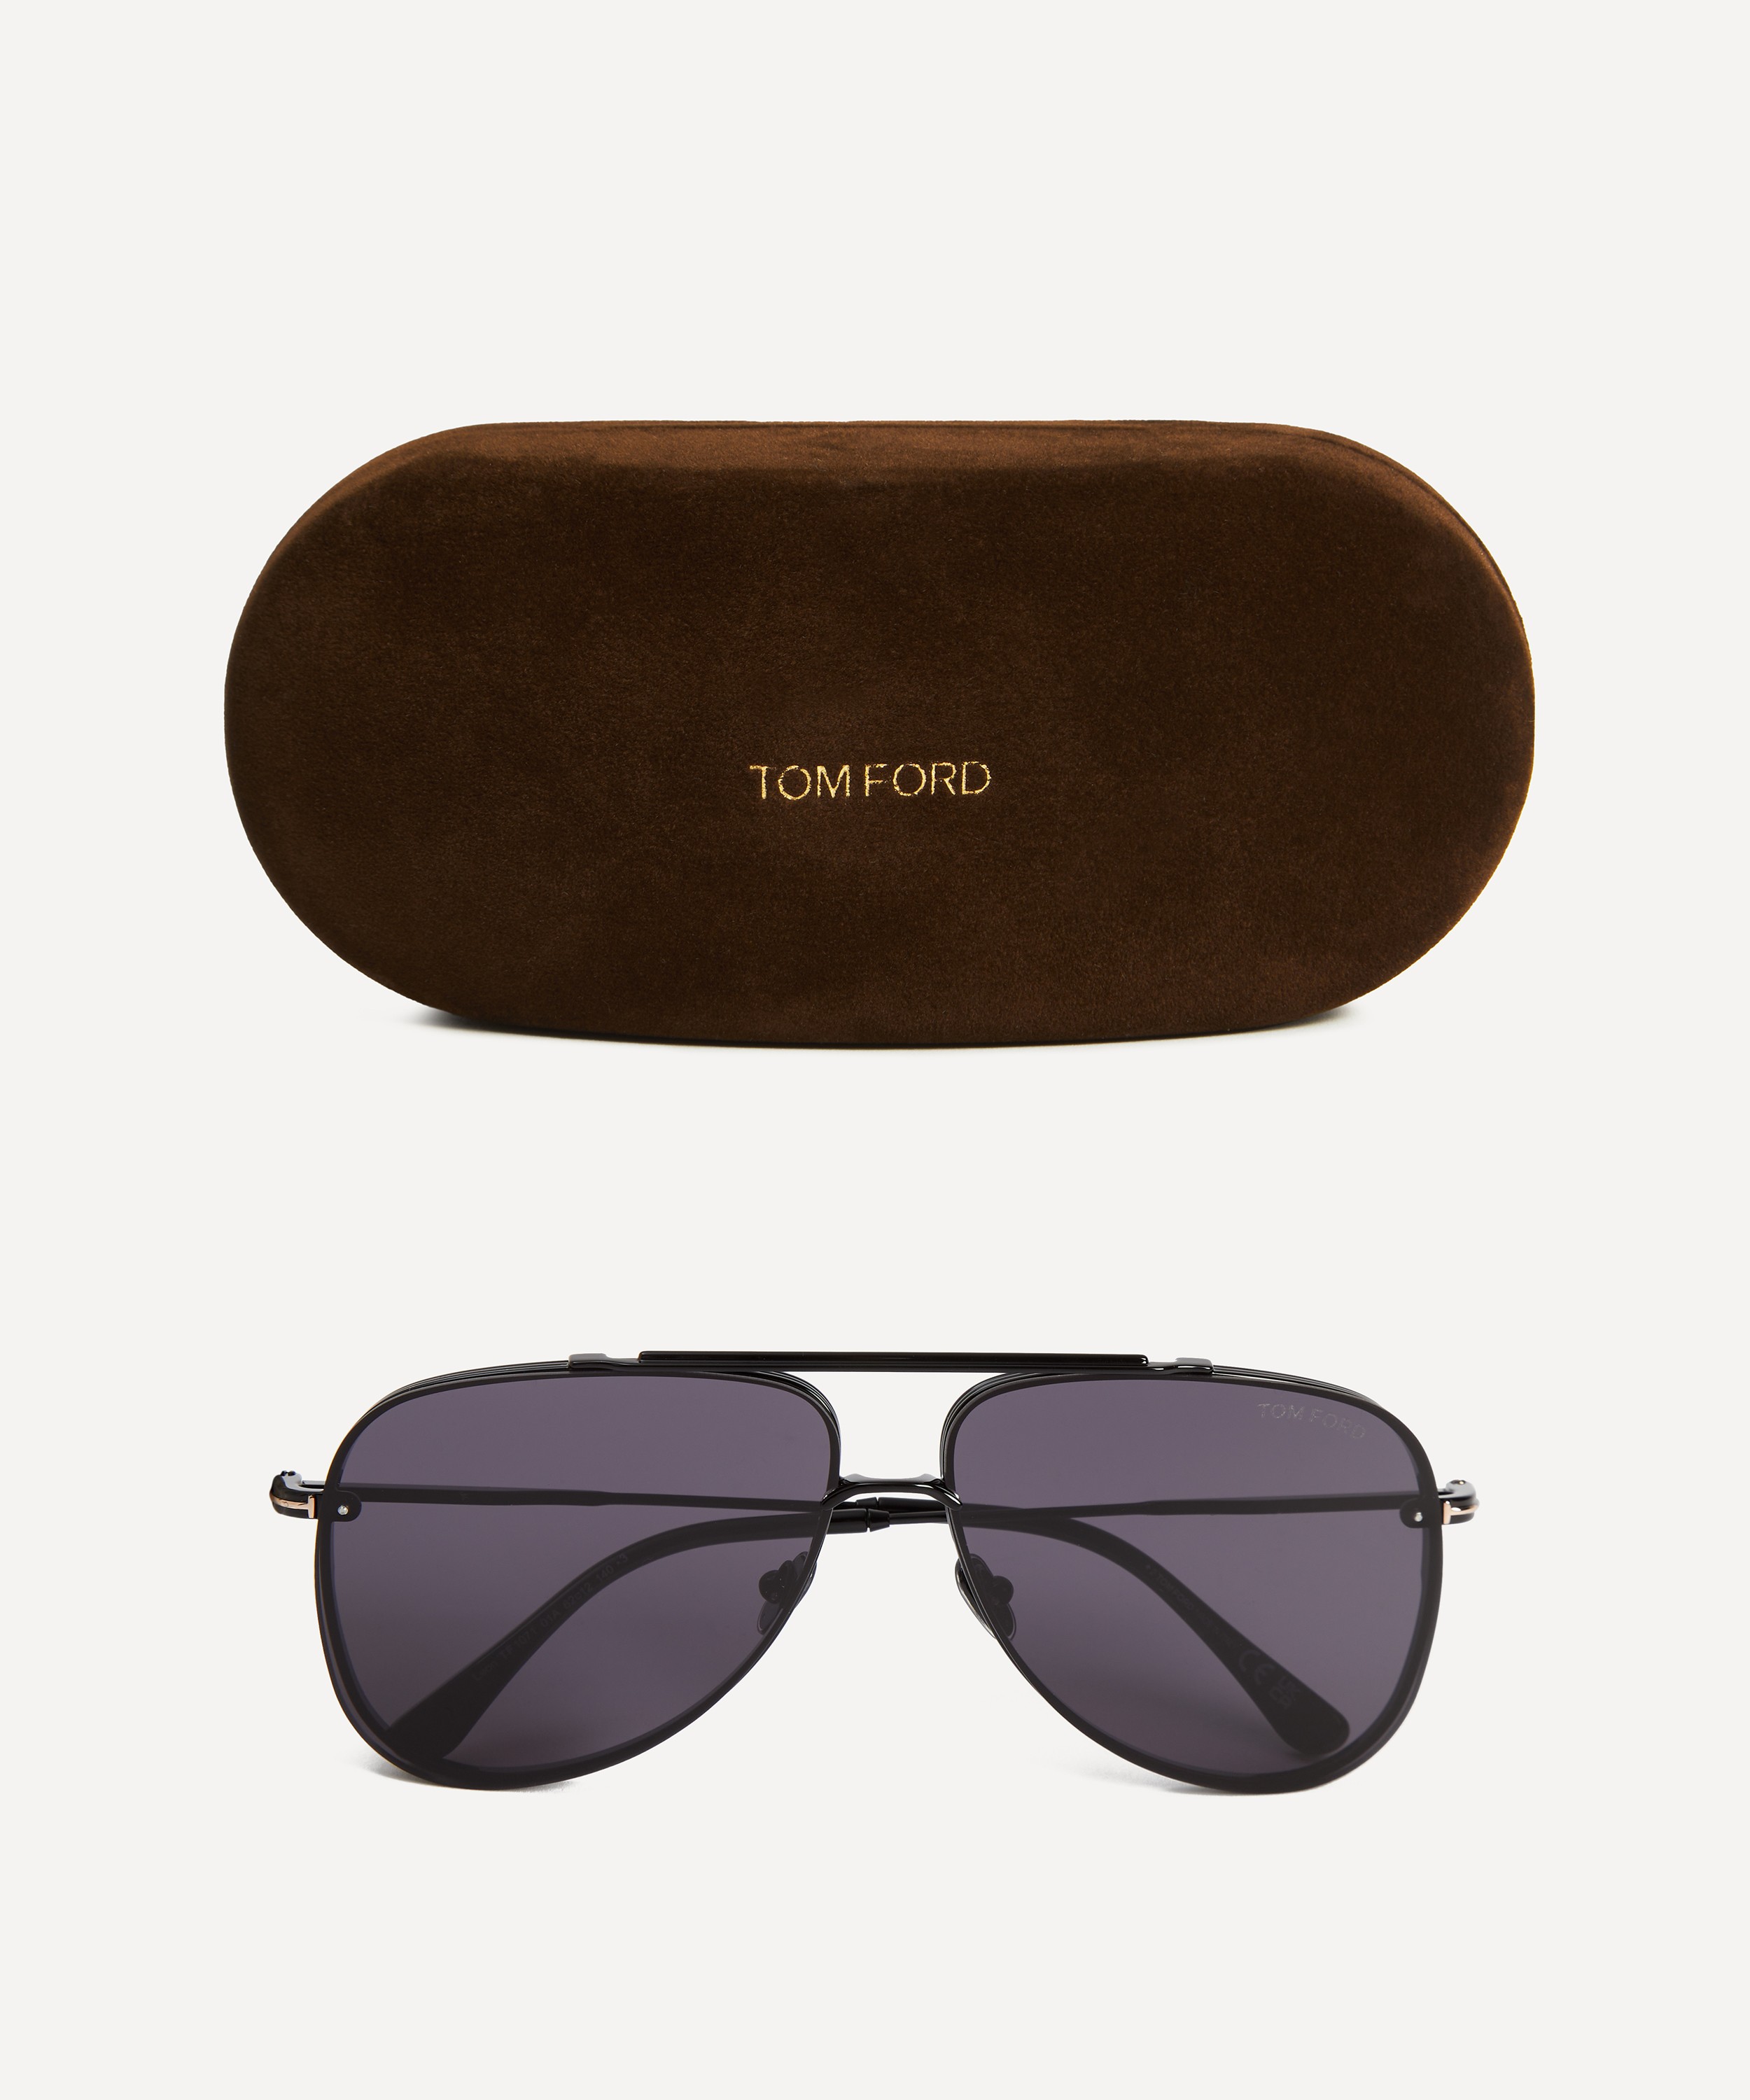 Tom Ford - Aviator Sunglasses image number 3